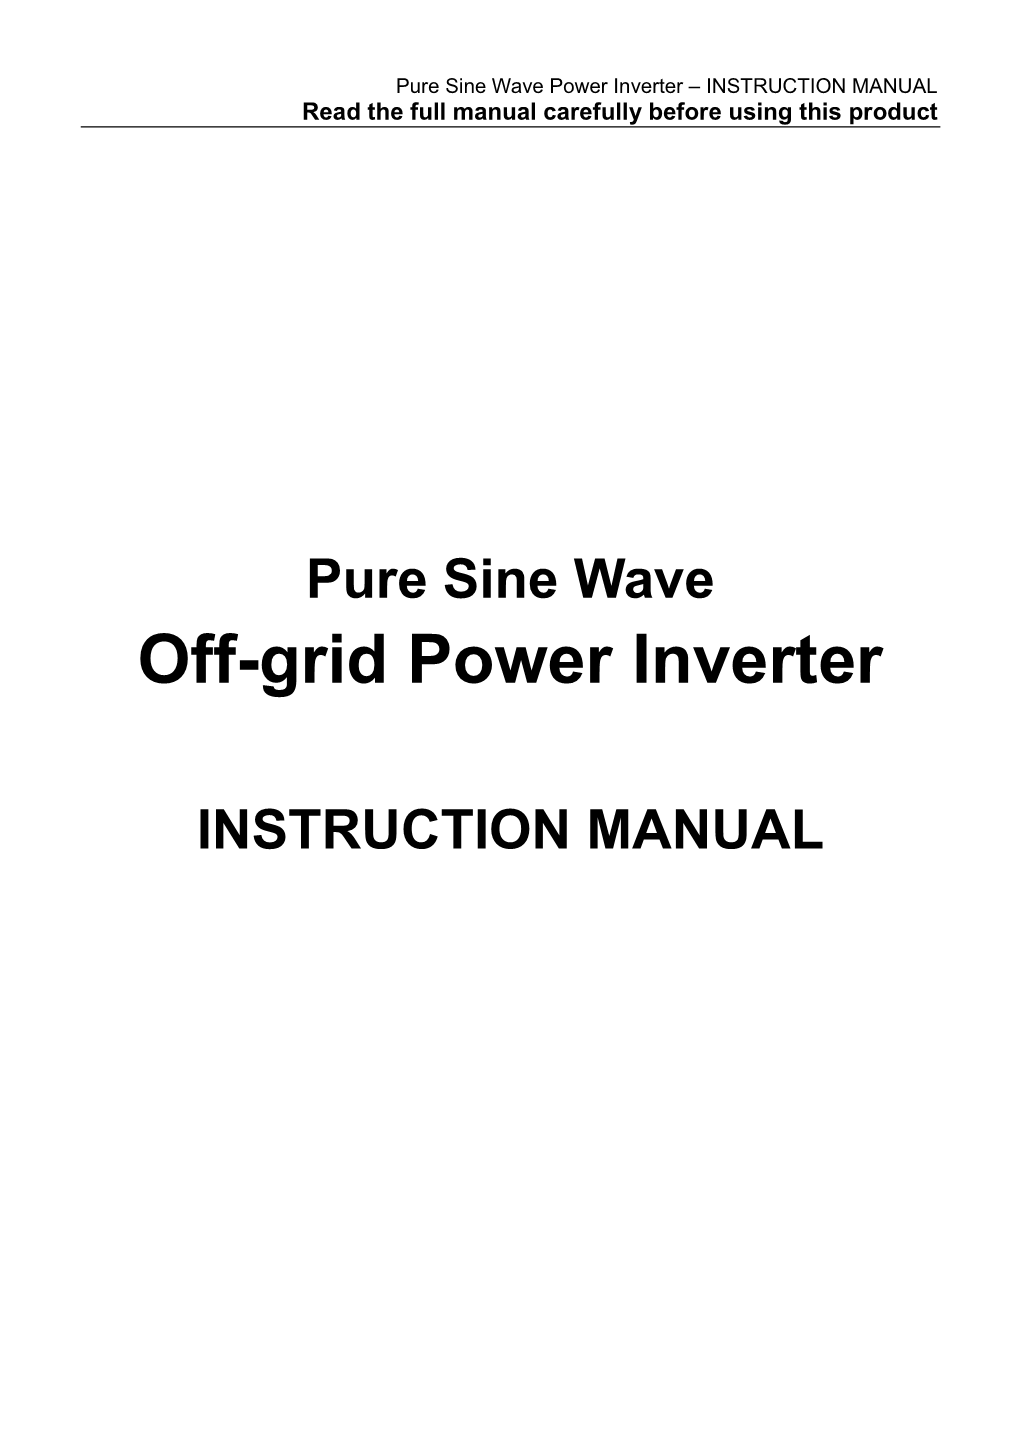 Off-Grid Power Inverter